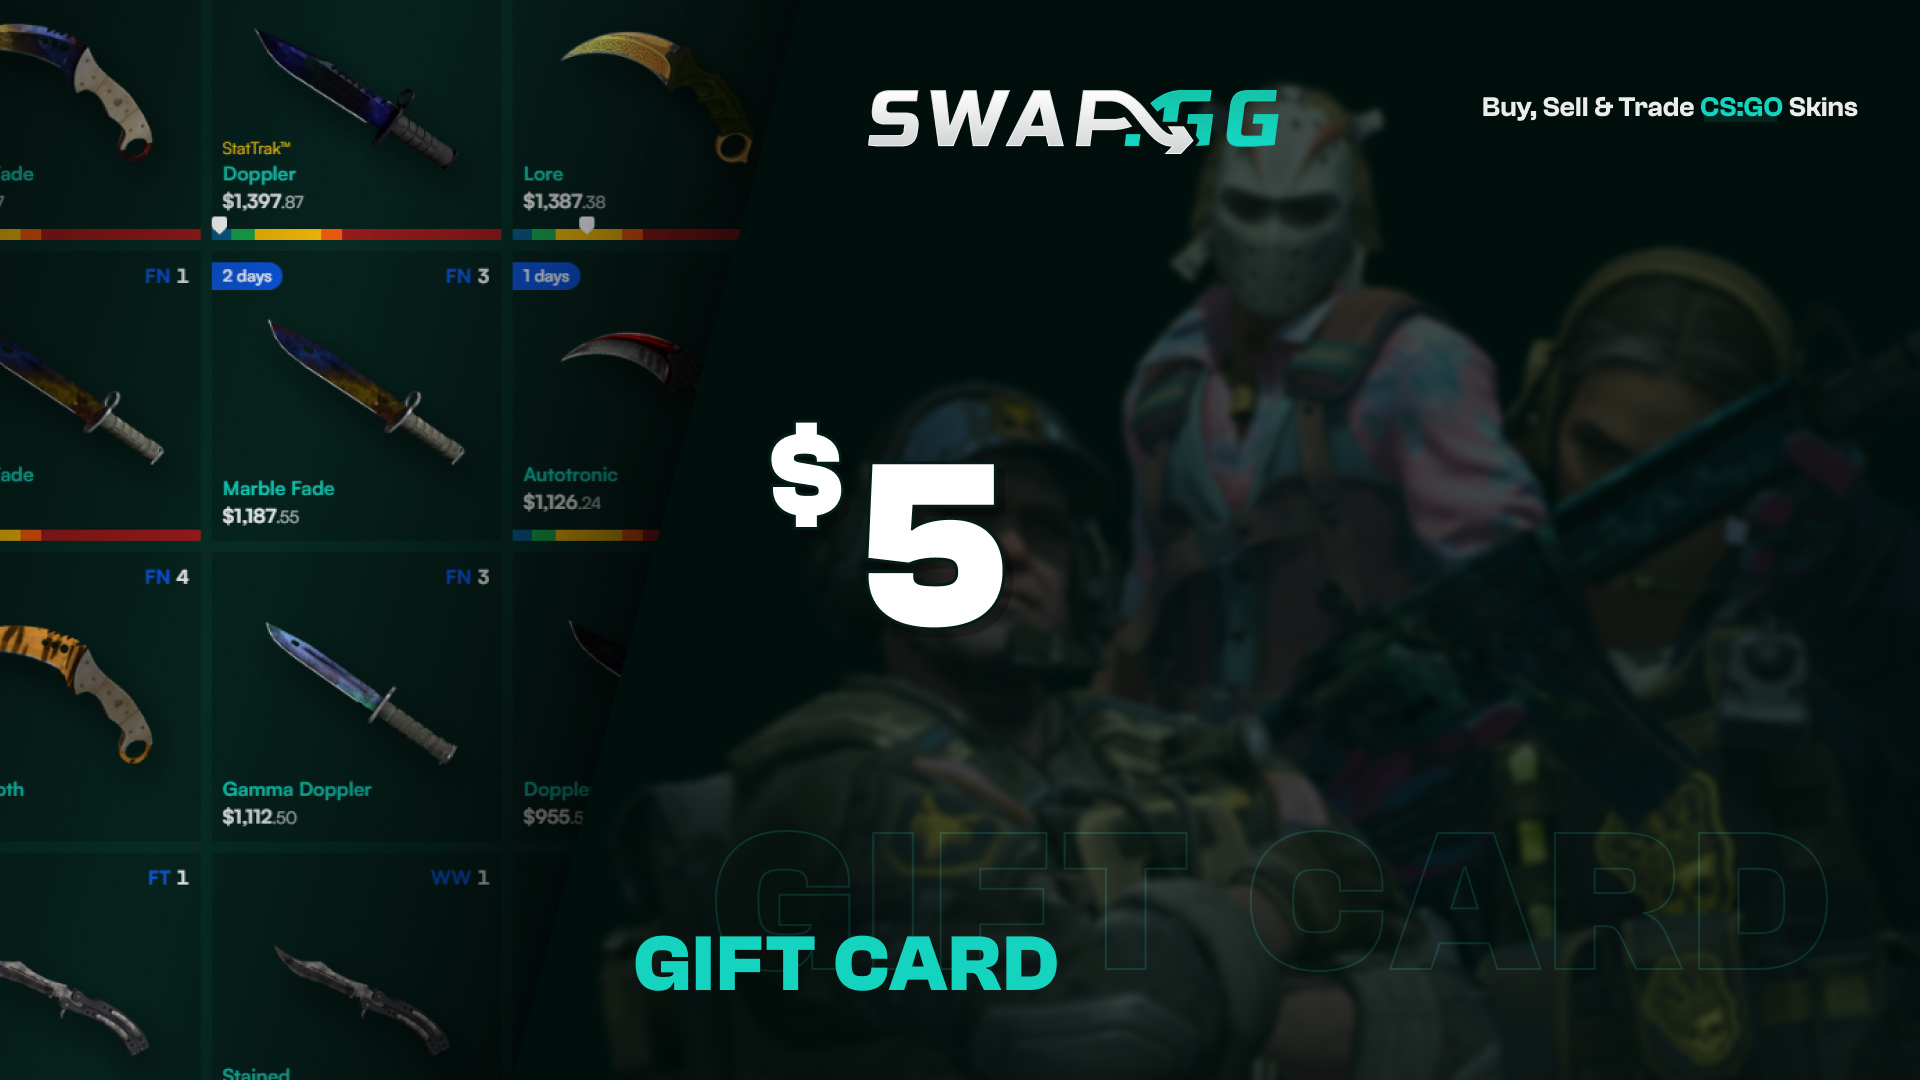 Swap.gg $5 Gift Card 3.97 $